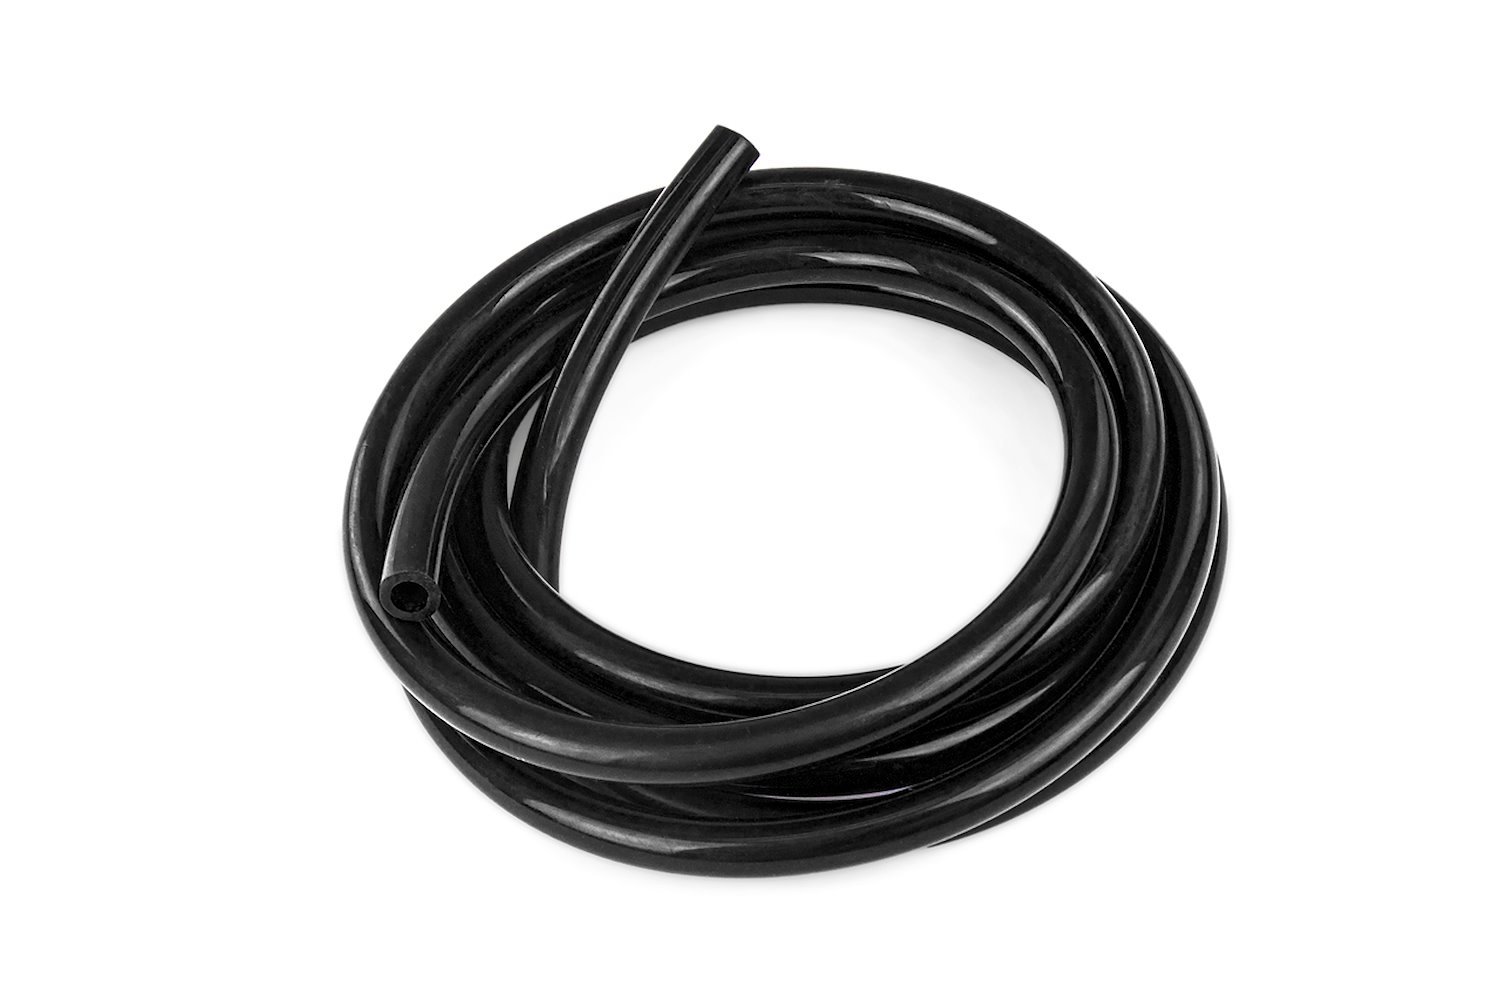 HTSVH6-BLKx10 High-Temperature Silicone Vacuum Hose Tubing, 1/4 in. ID, 10 ft. Roll, Black